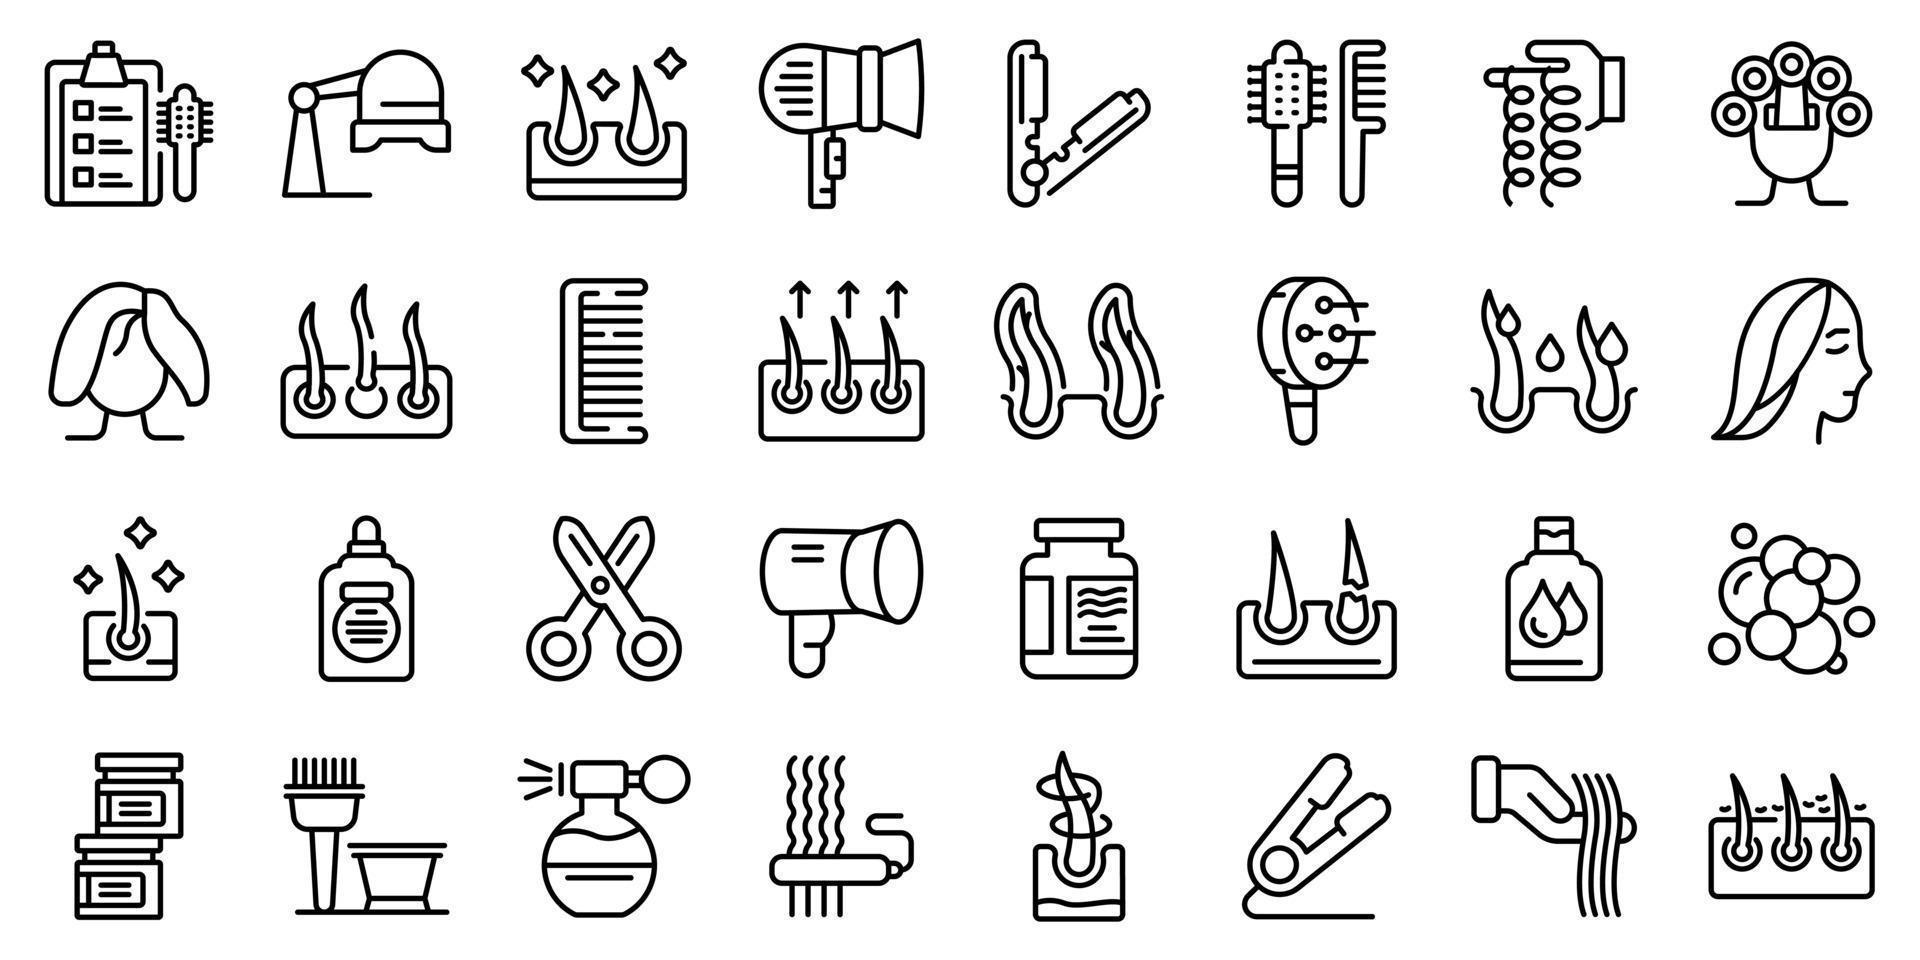 conjunto de iconos de pelo rizado, estilo de esquema vector